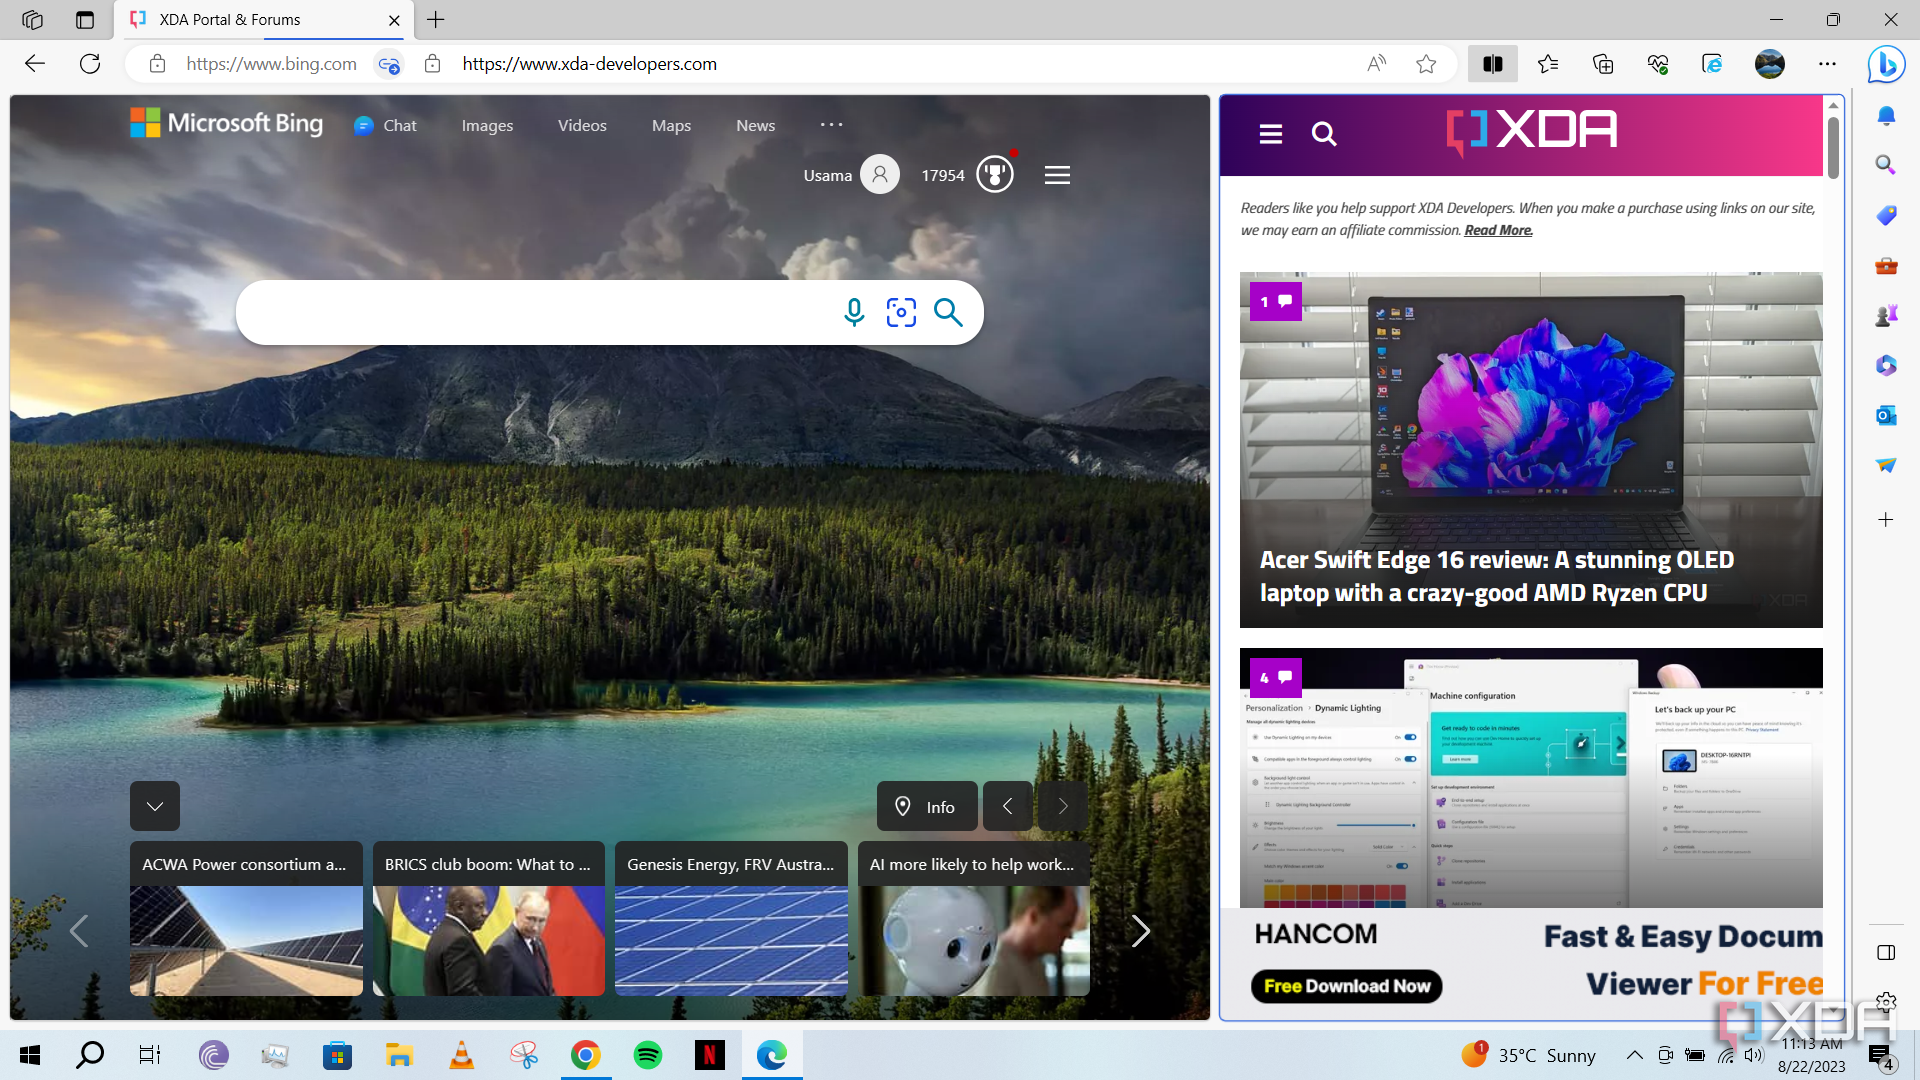 Microsoft Edge open in Split screen view